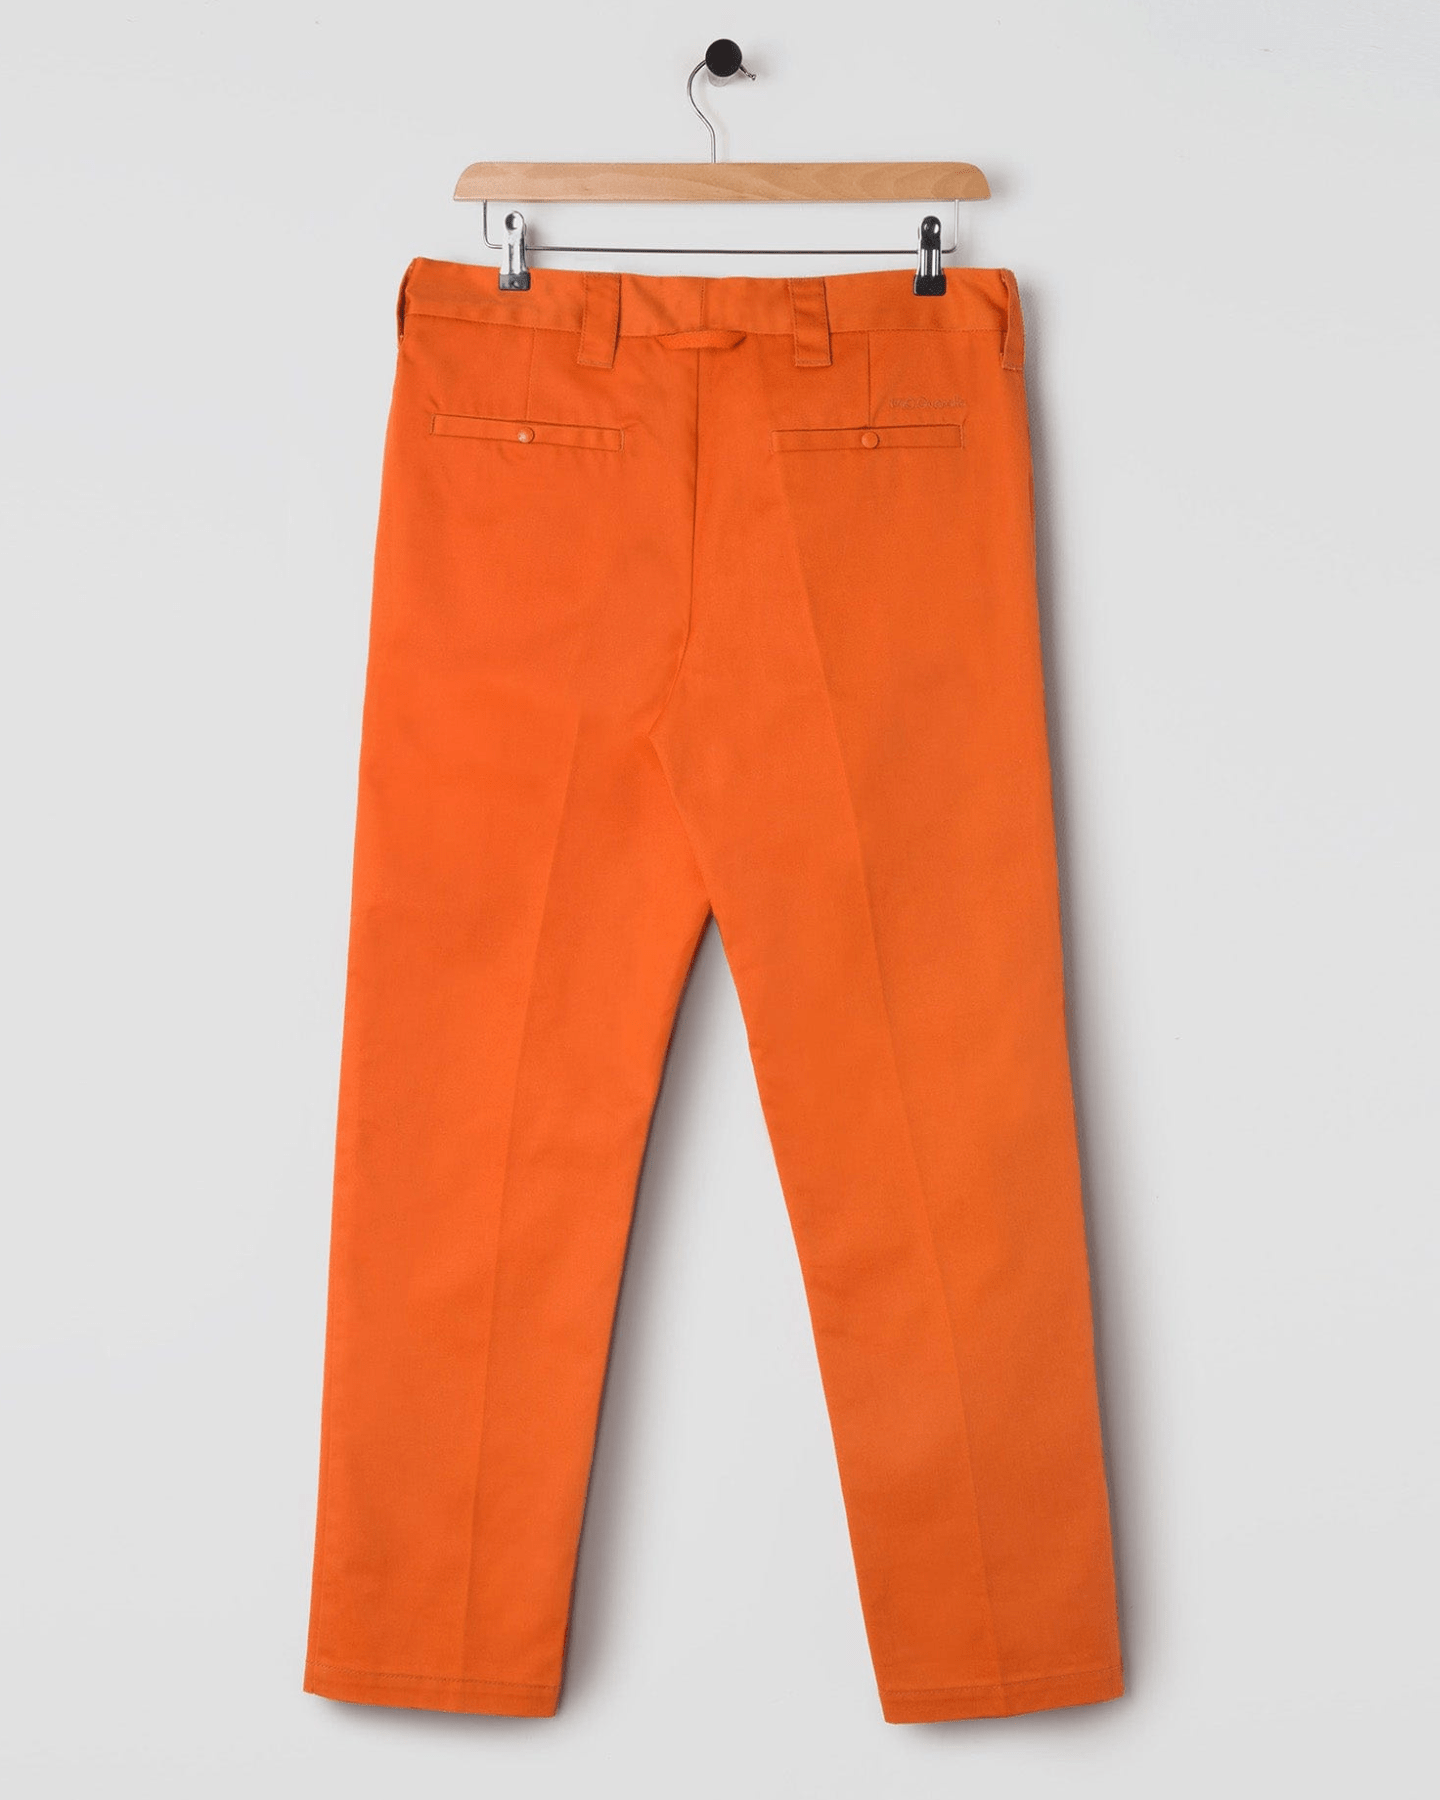 Buy Orange Jeans  Jeggings for Women by SHOWOFF Online  Ajiocom